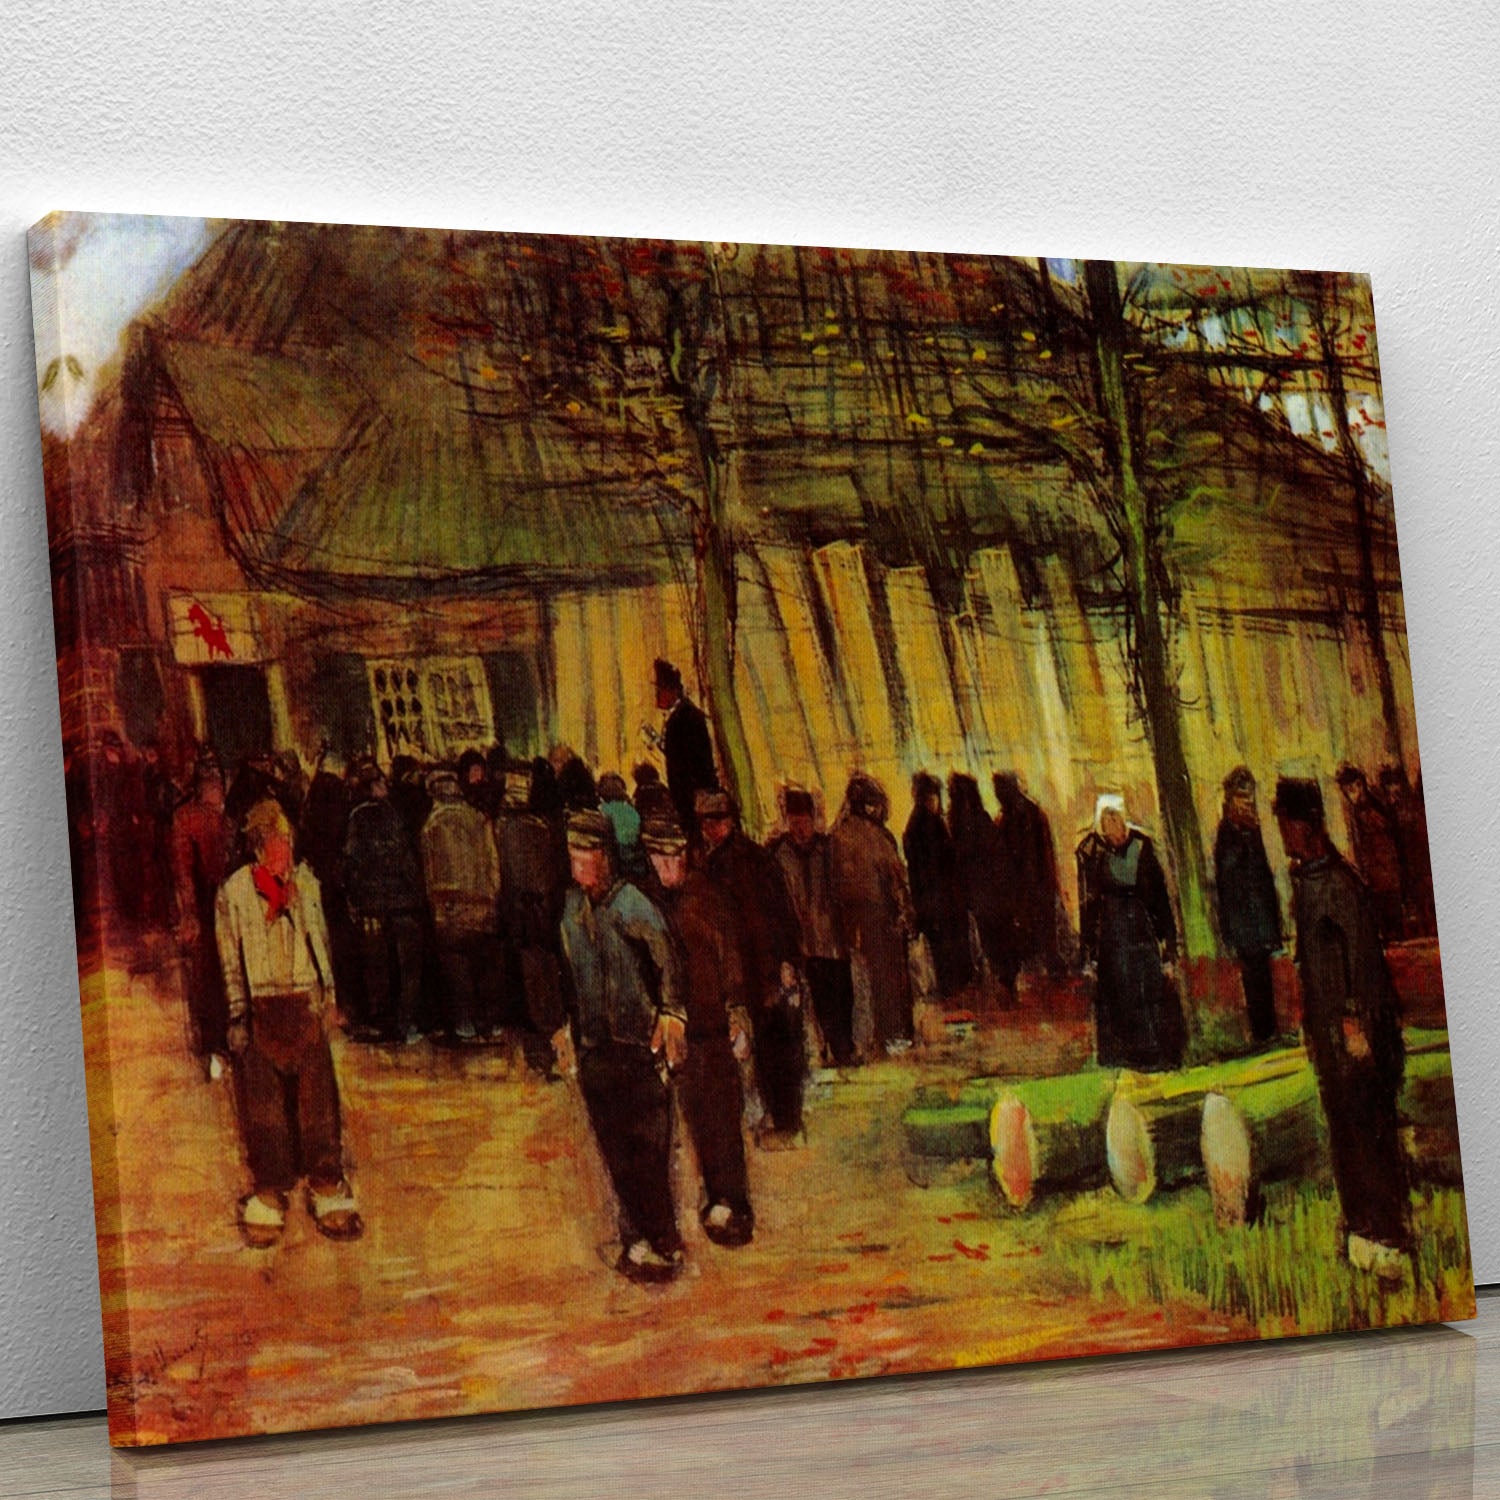 Lumber Sale by Van Gogh Canvas Print or Poster - Canvas Art Rocks - 1